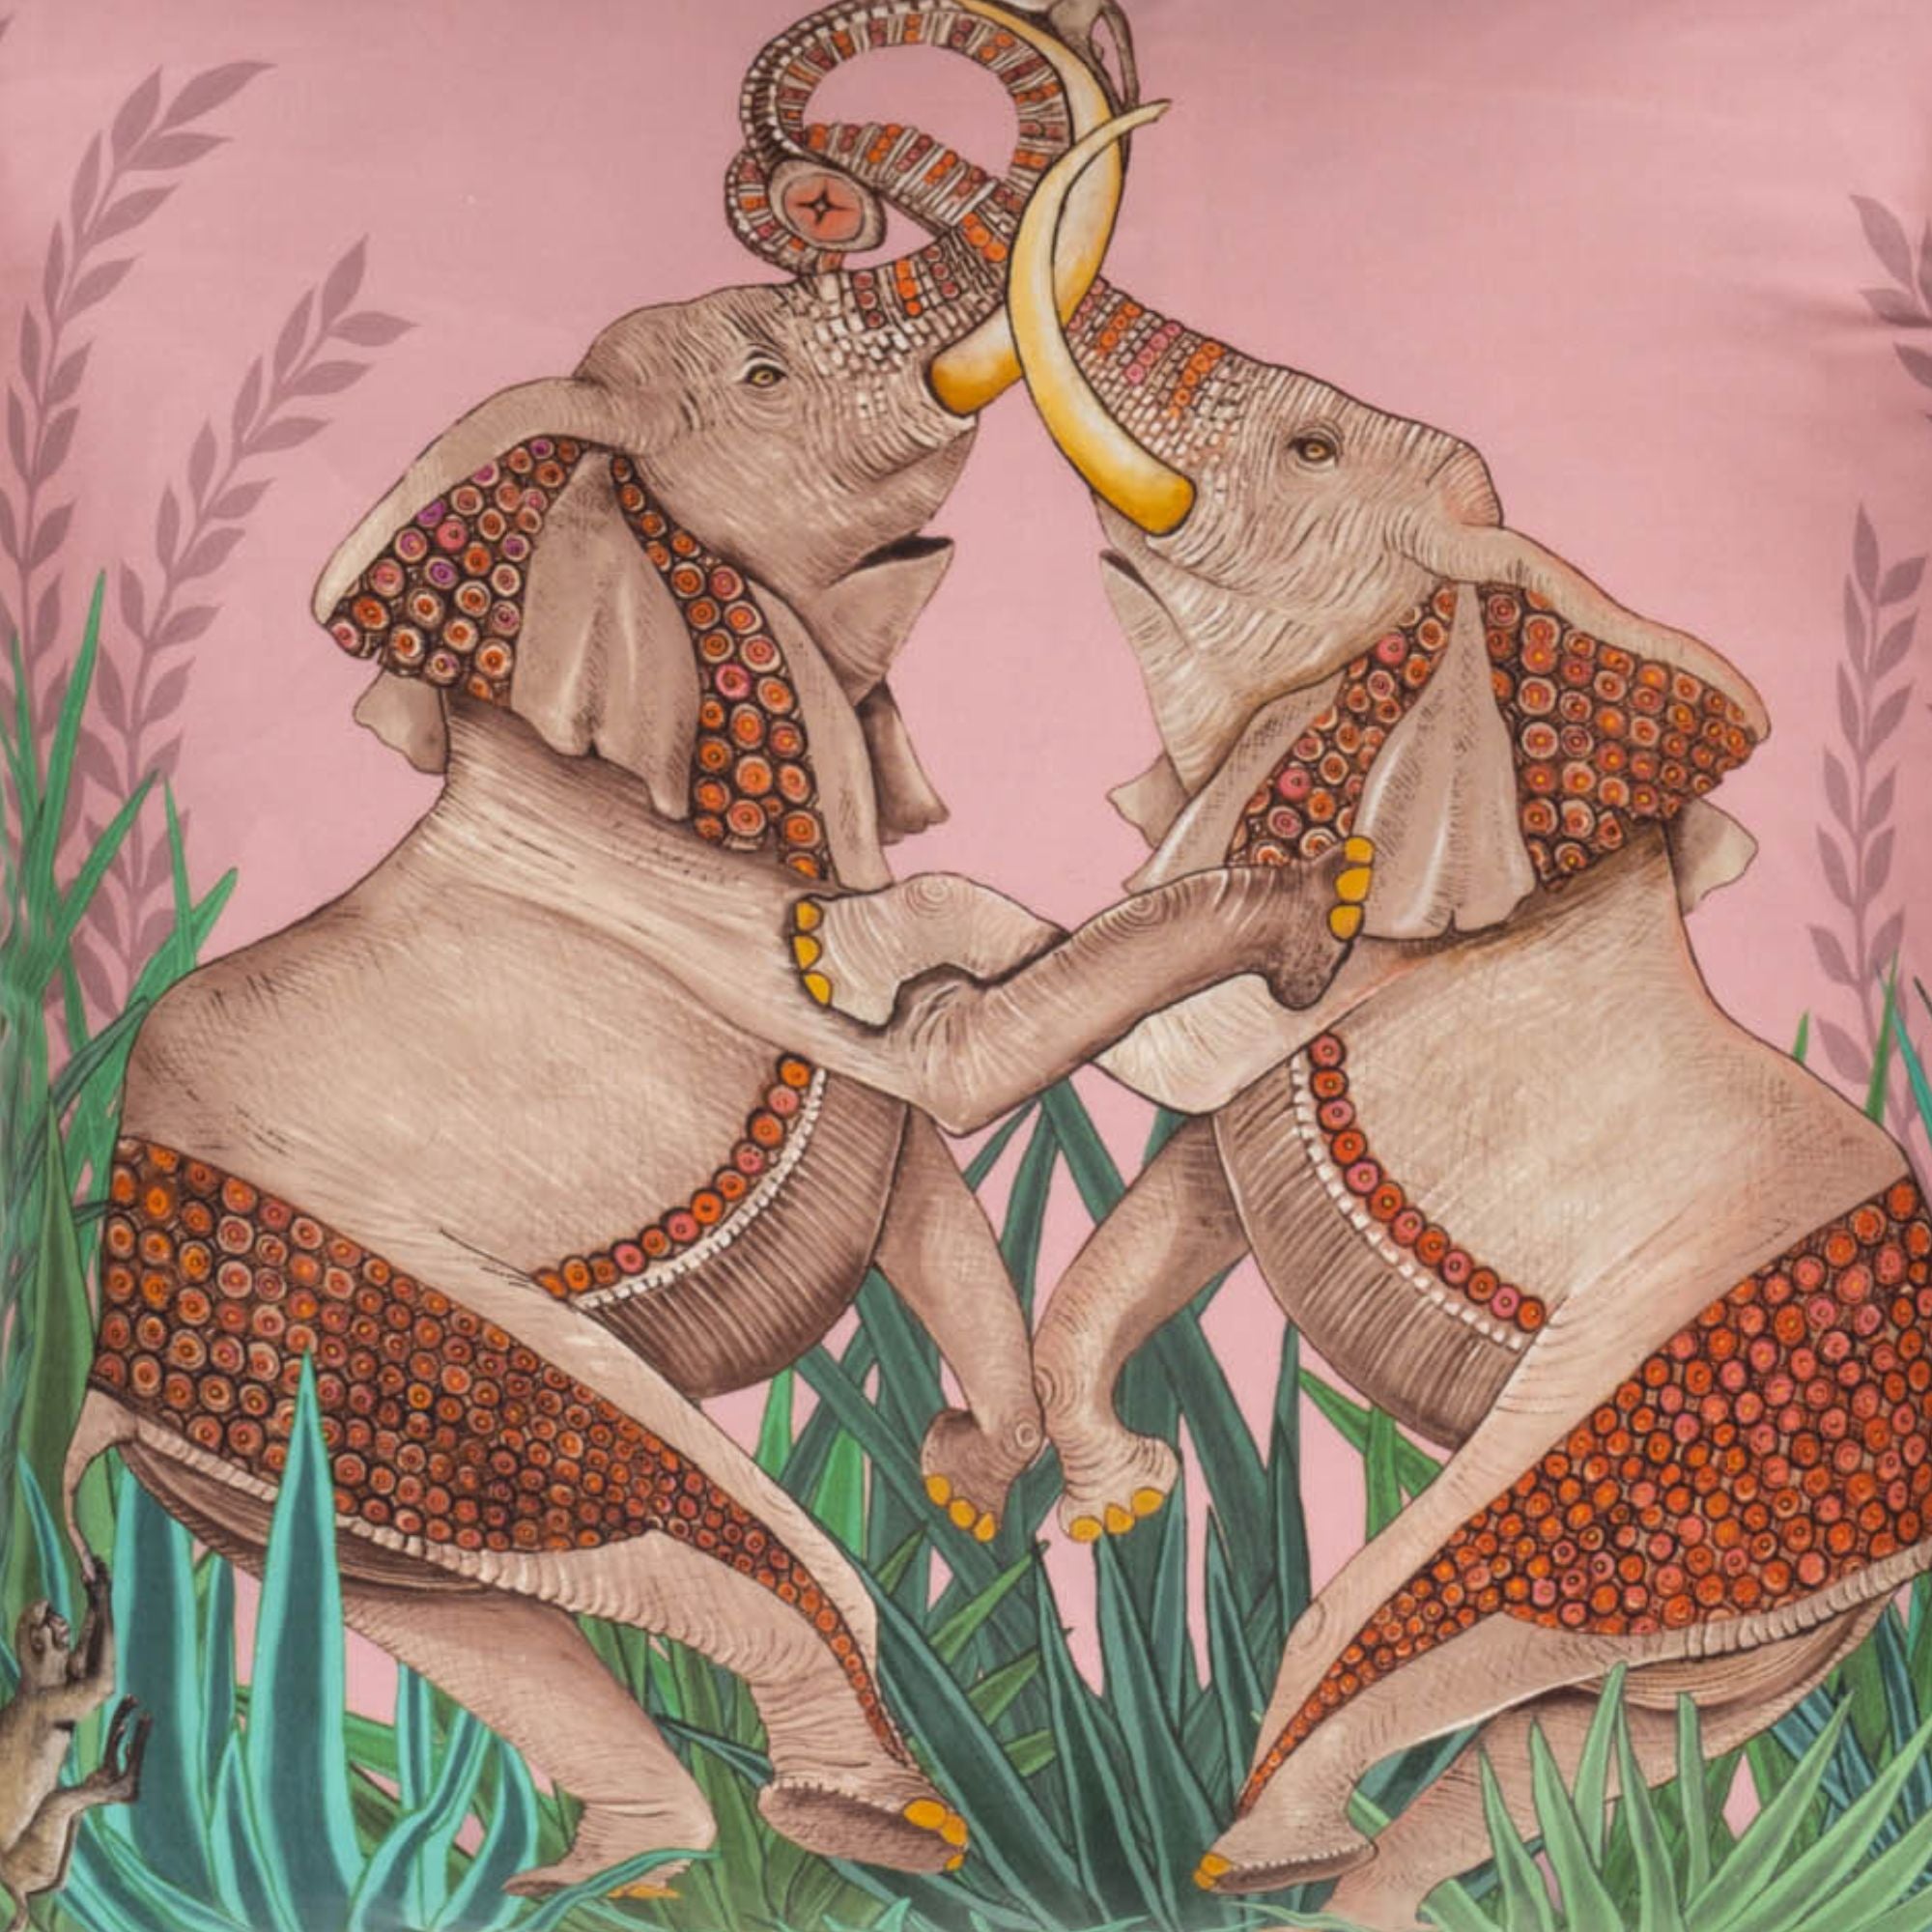 Dancing Elephants Pillow - Silk - Magnolia